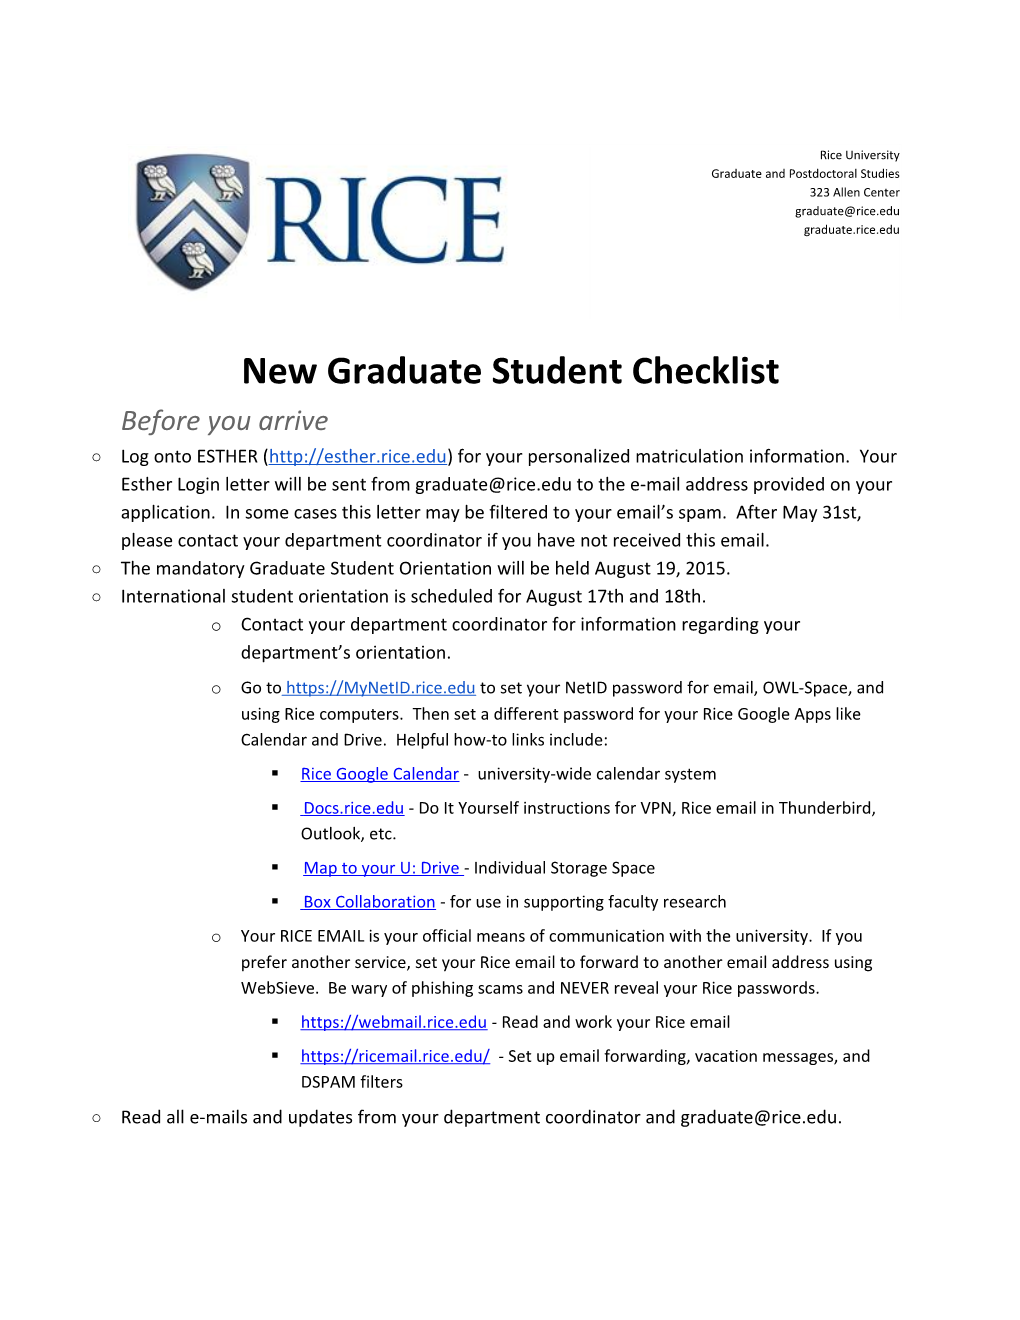 New Graduate Student Checklist - Last Revised Feb 2012